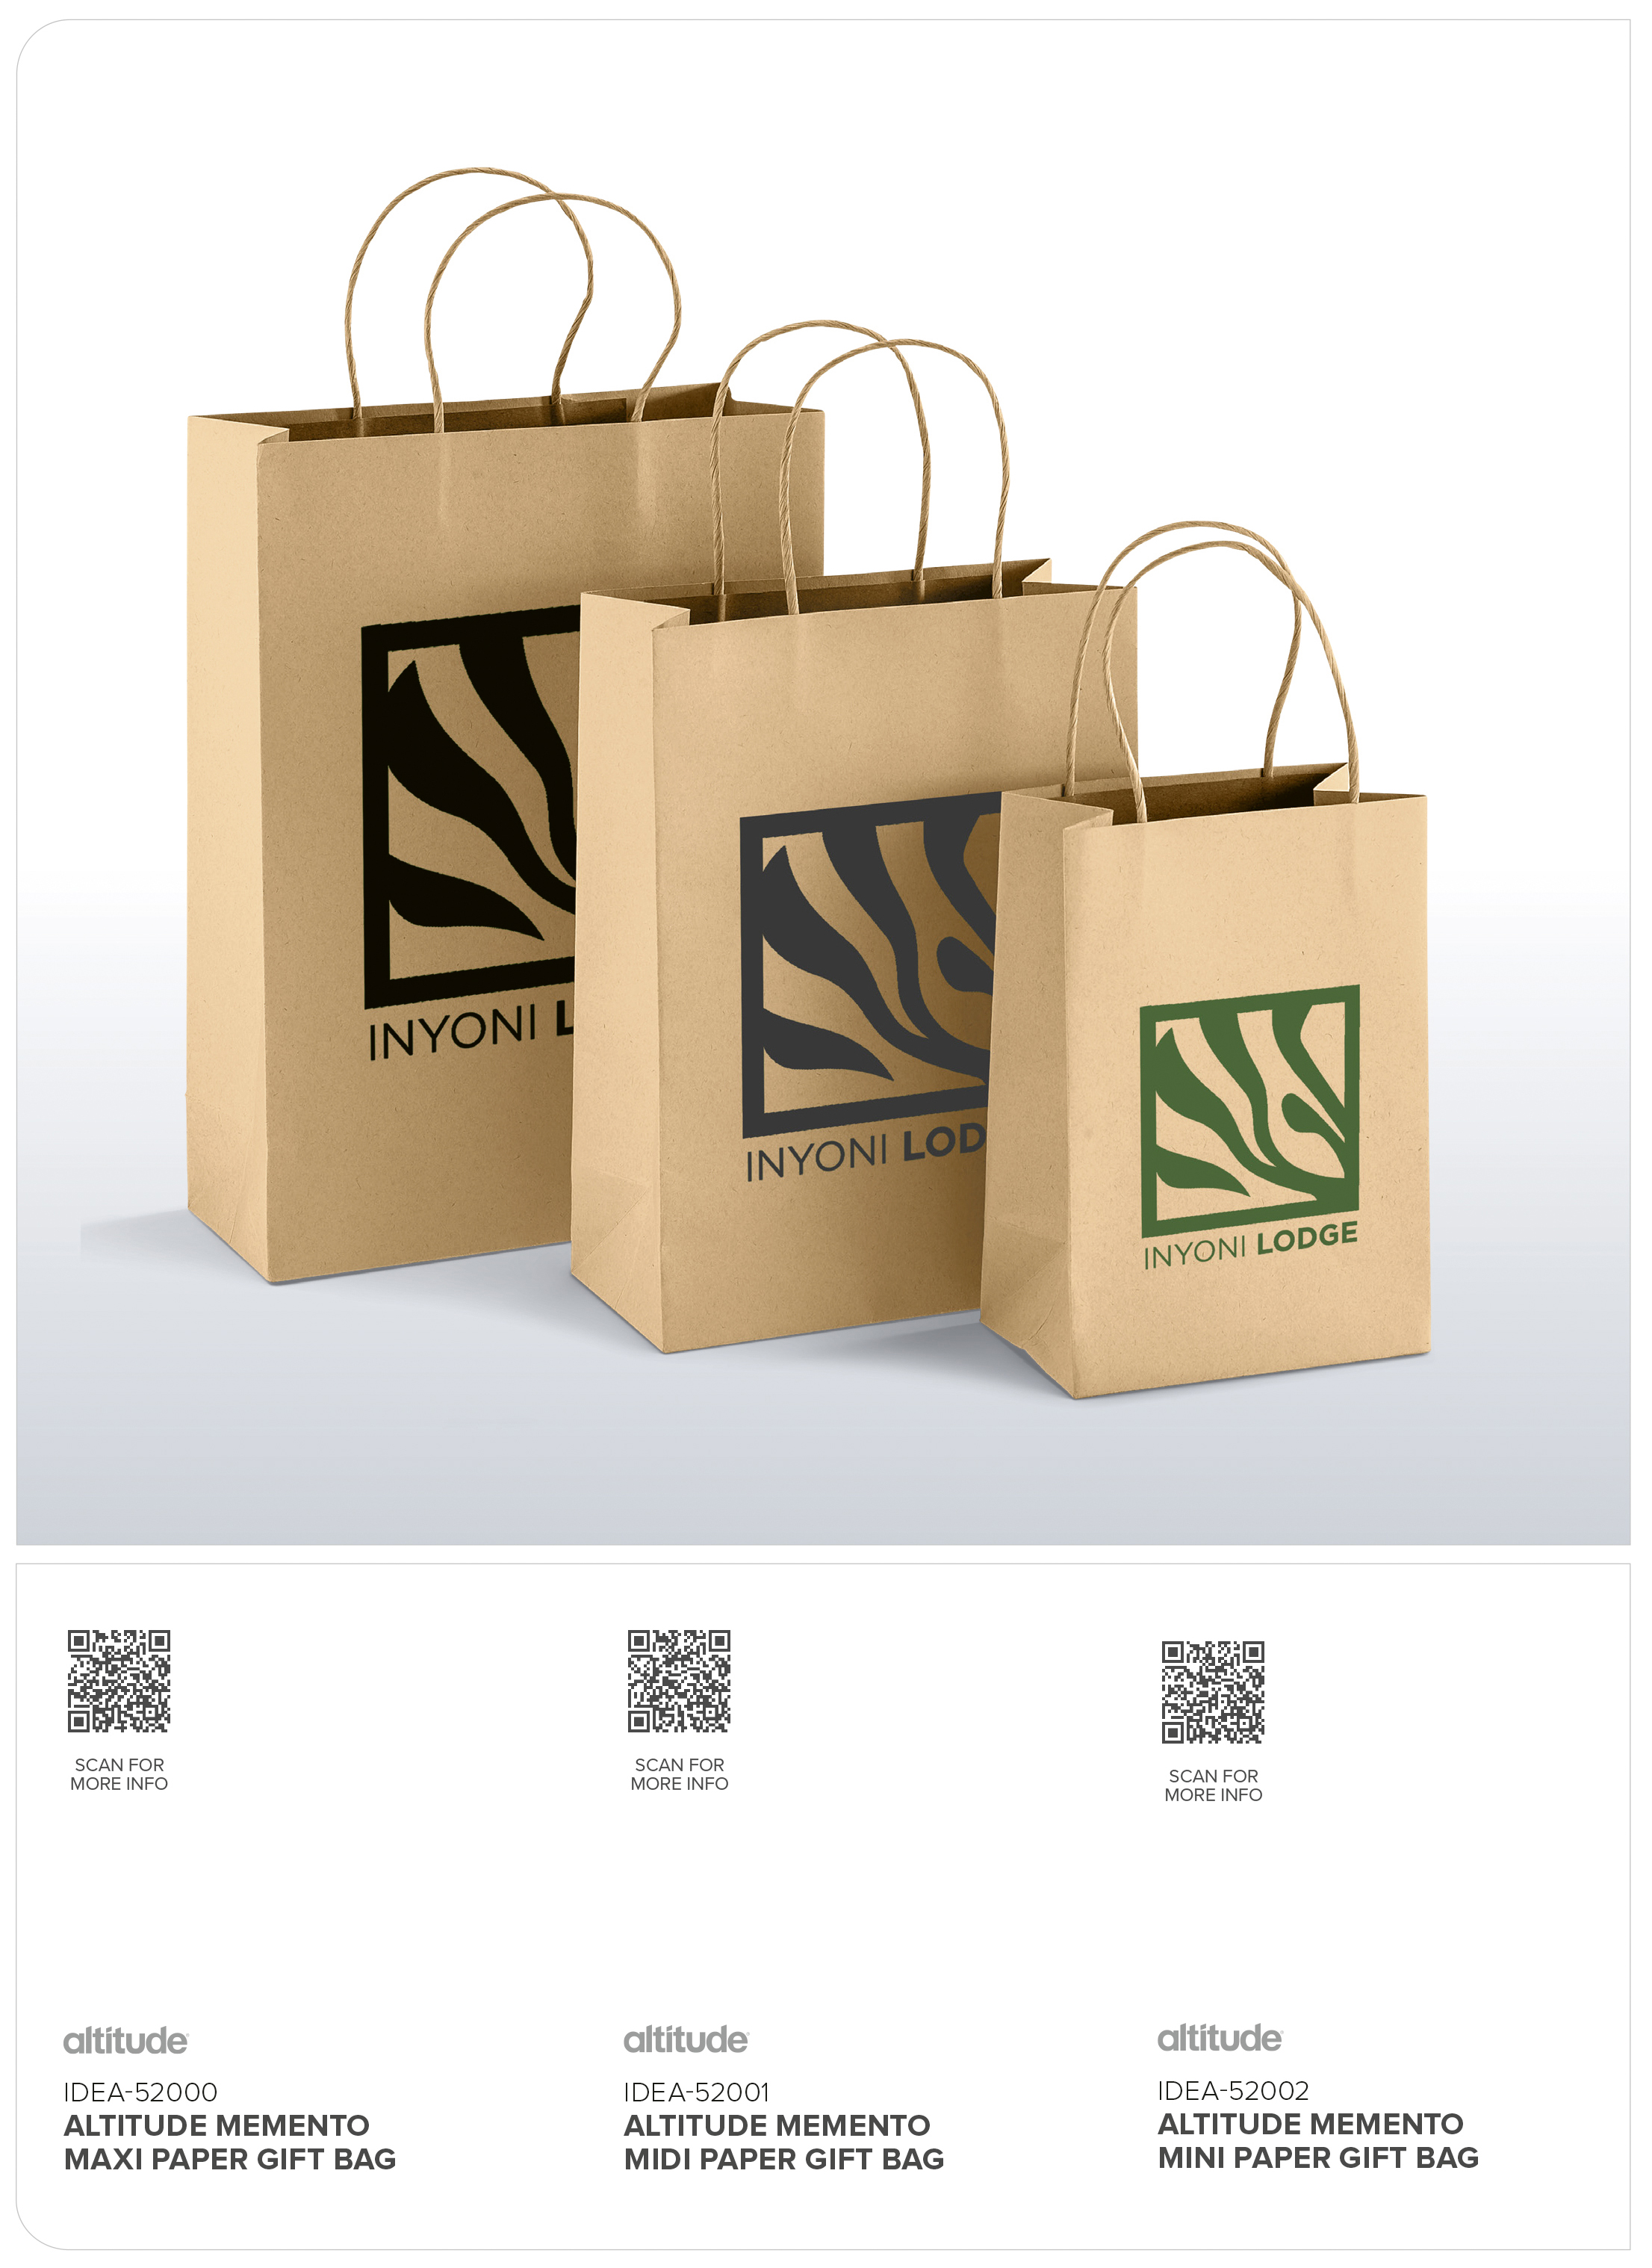 IDEA-52002 - Altitude Memento Mini Paper Gift Bag - Catalogue Image